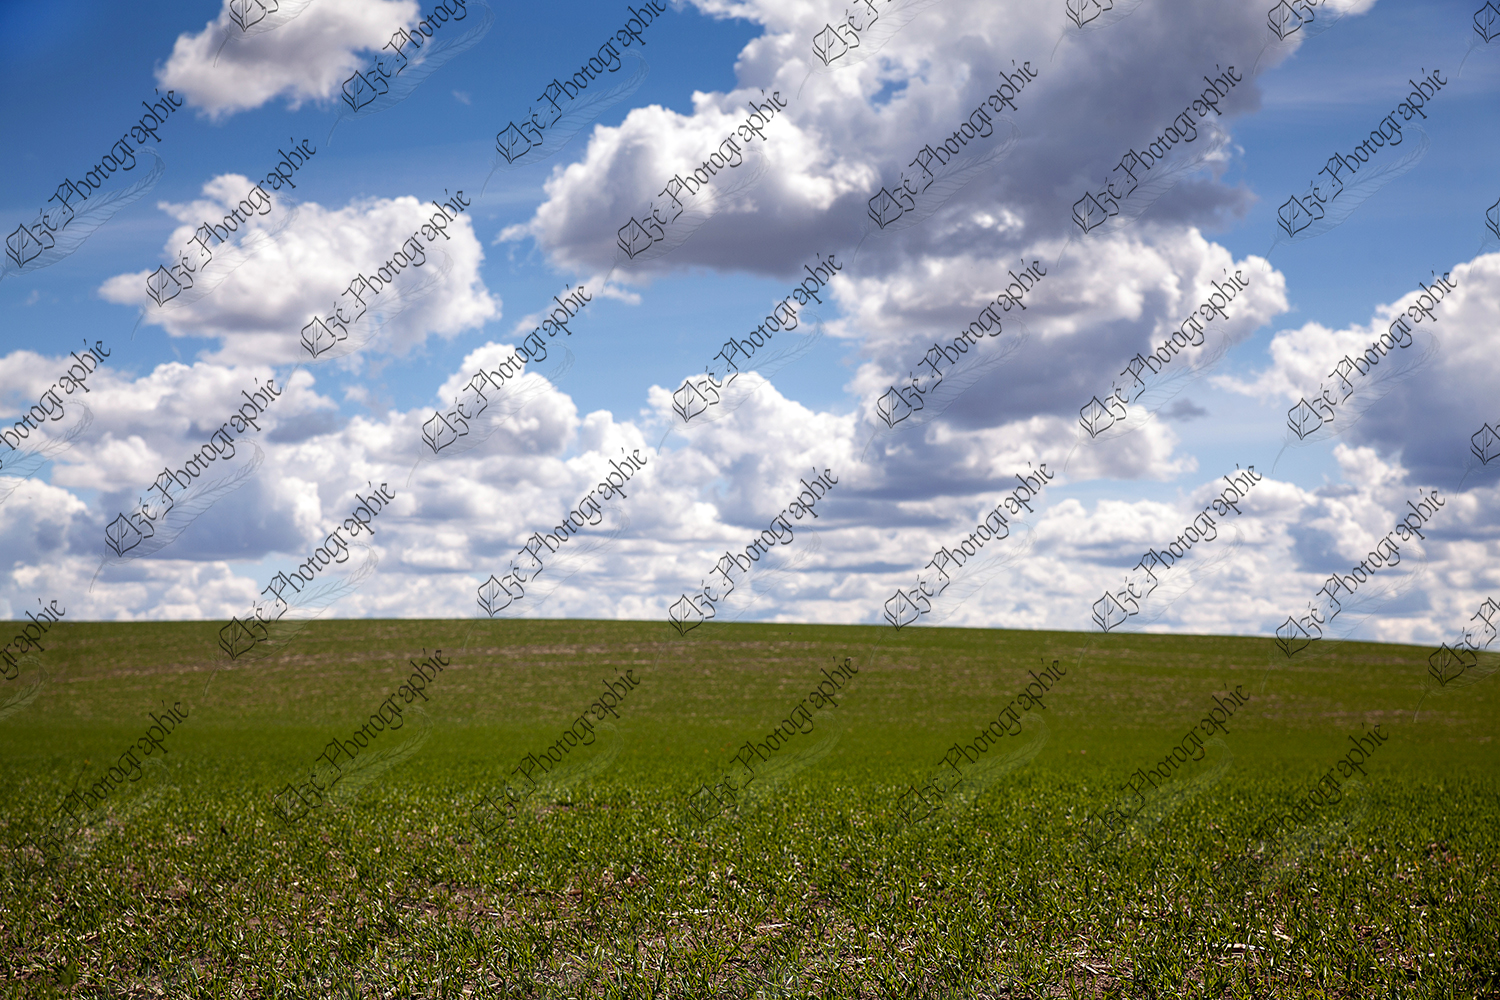 elze_photo_9953_campagne_culture_nuages_alfalfa_field_after_harvest